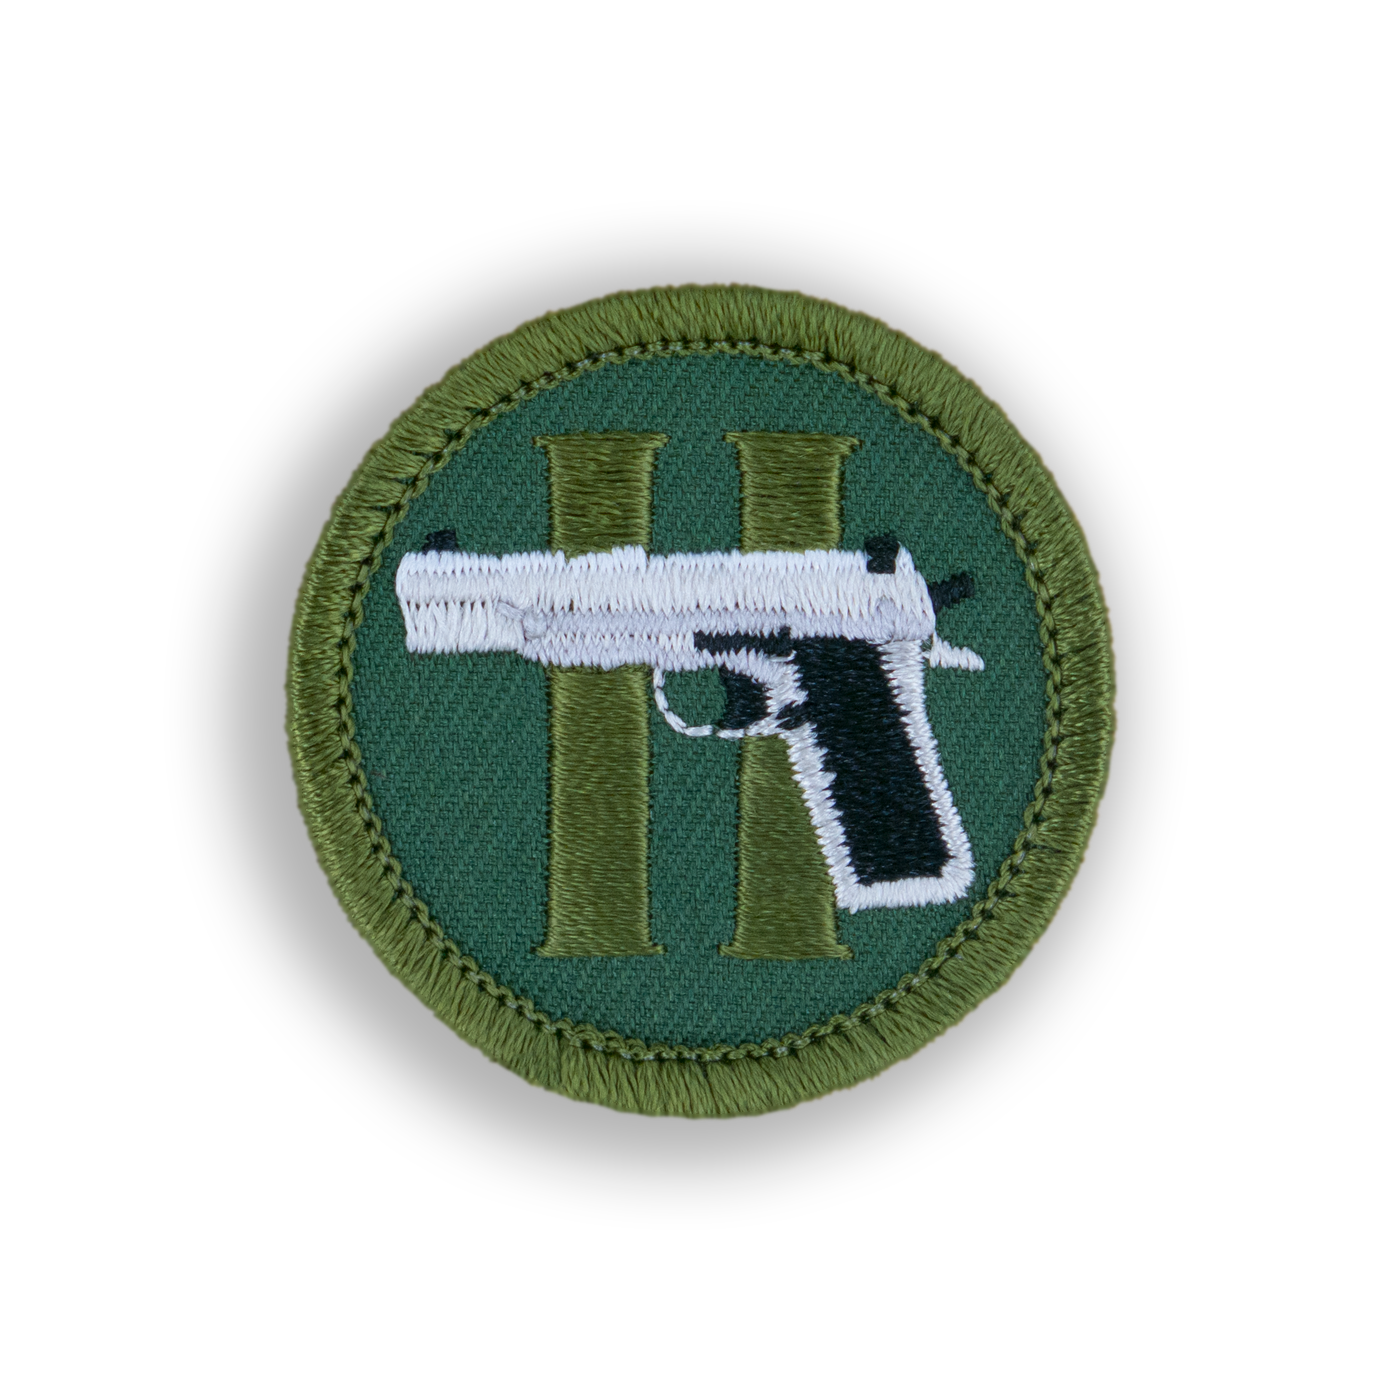 Gun Nut Patch | Demerit Wear - Fake Merit Badges